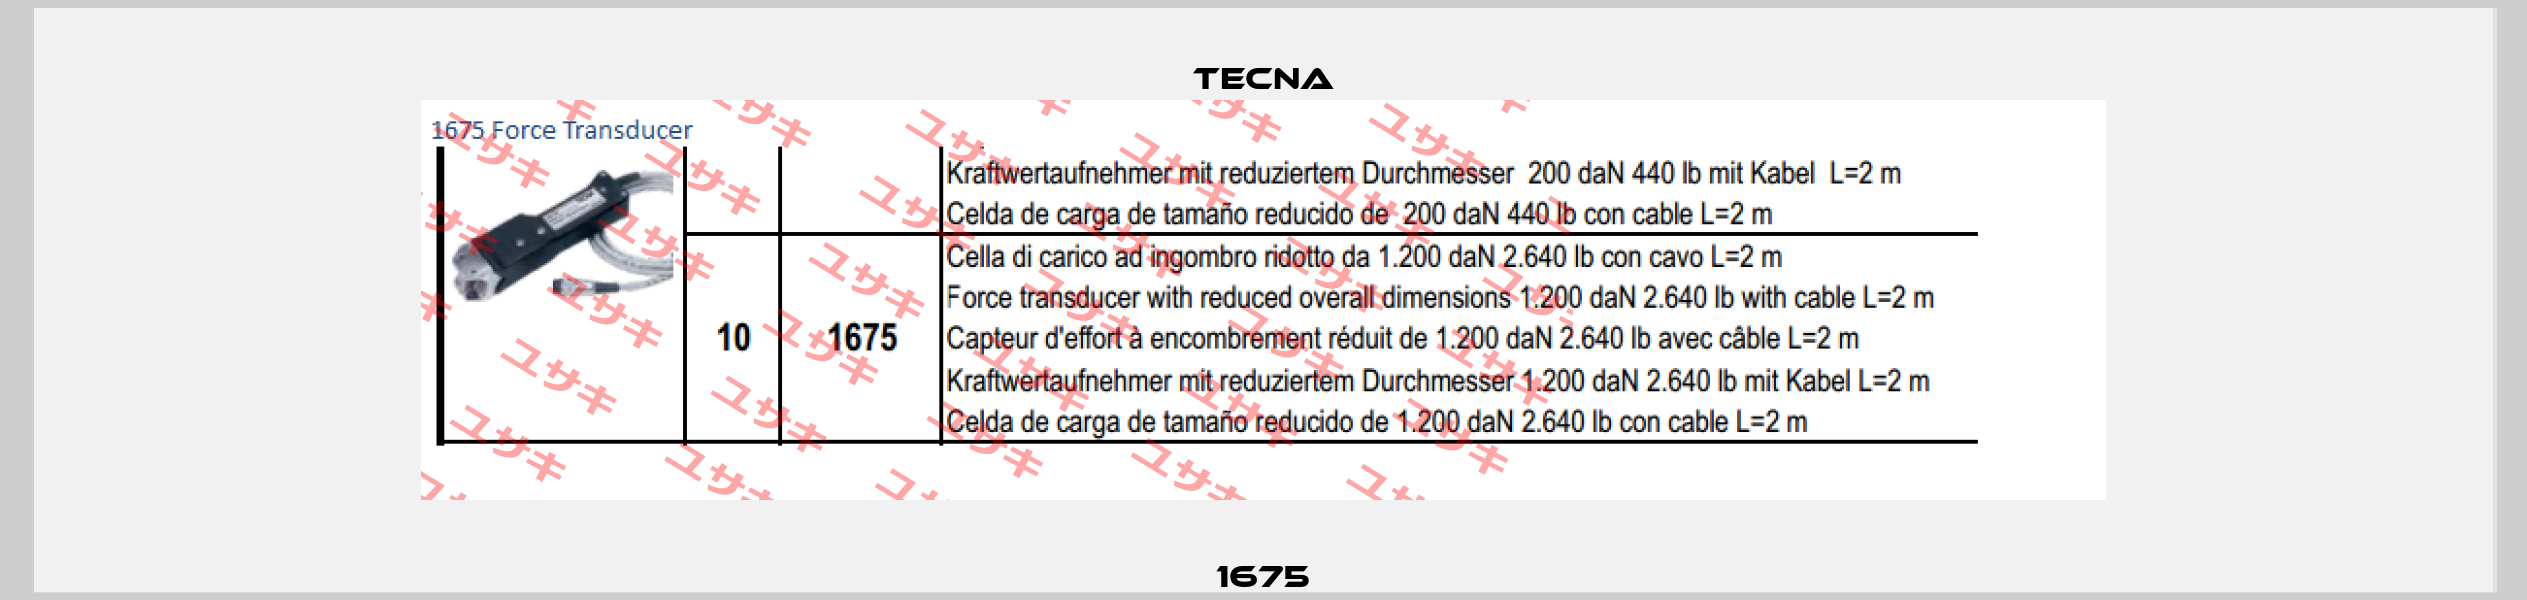 1675 Tecna